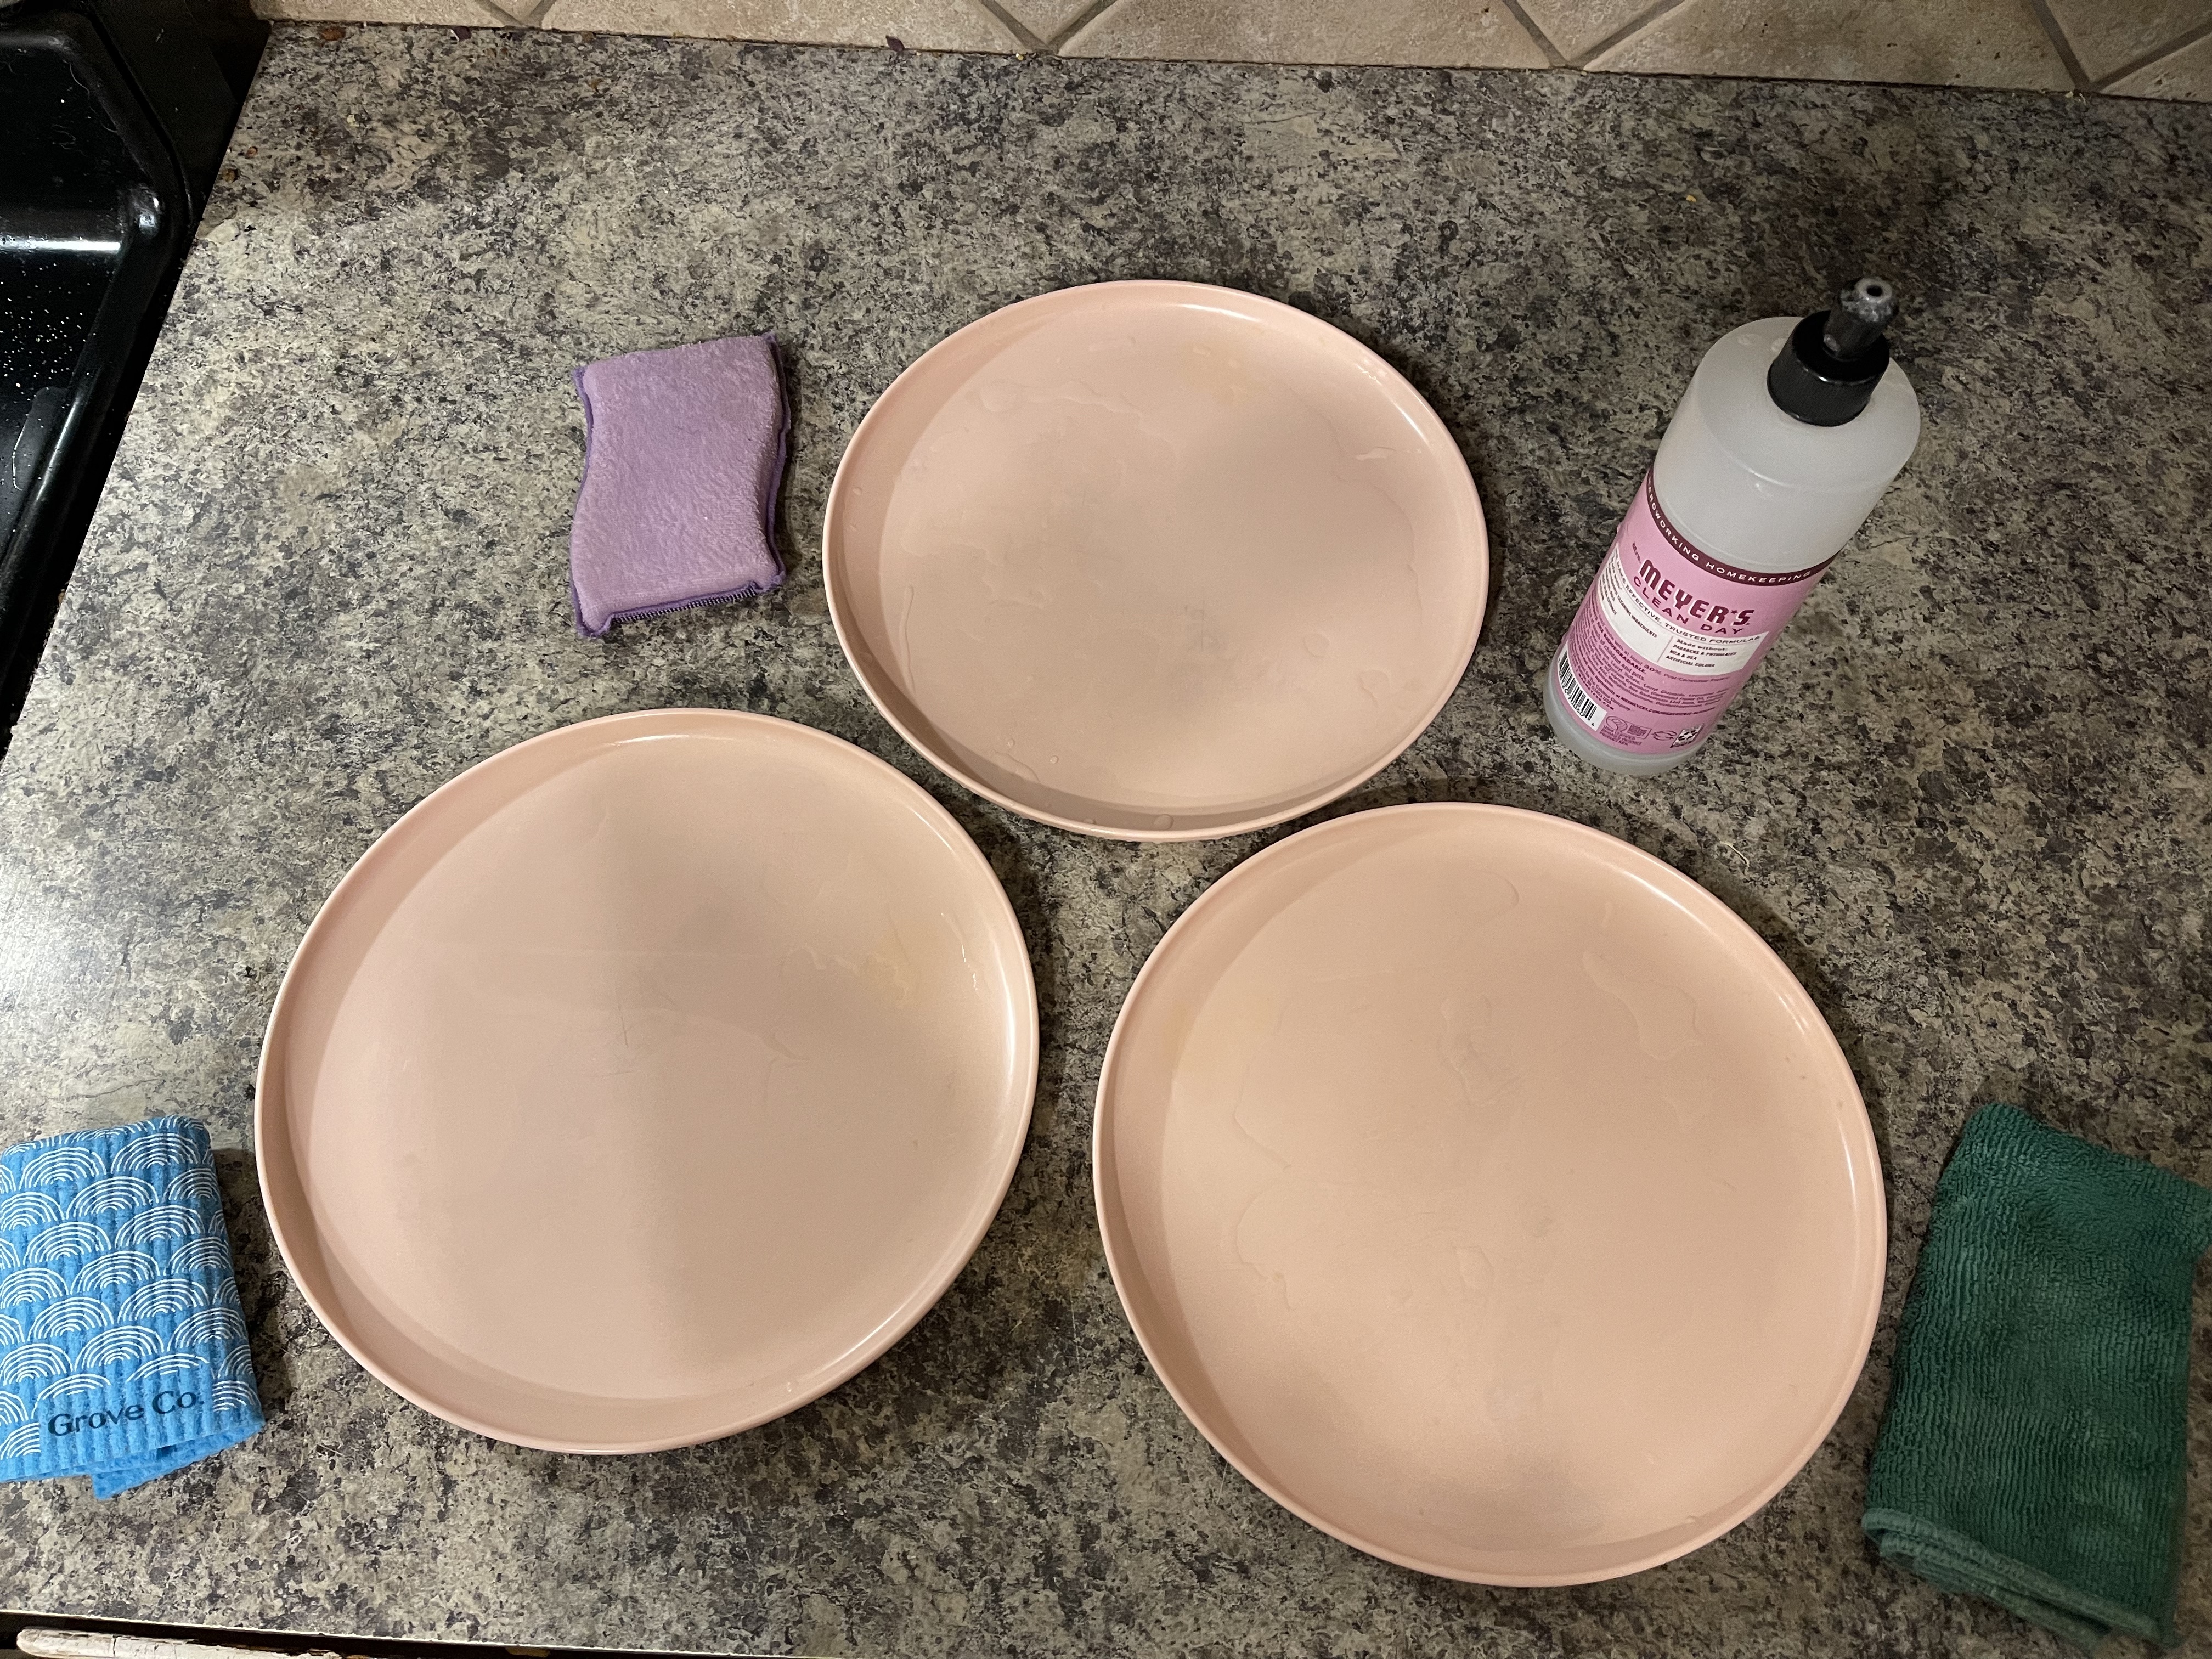 Three clean plates with European dish cloth, sponge and microfiber towel